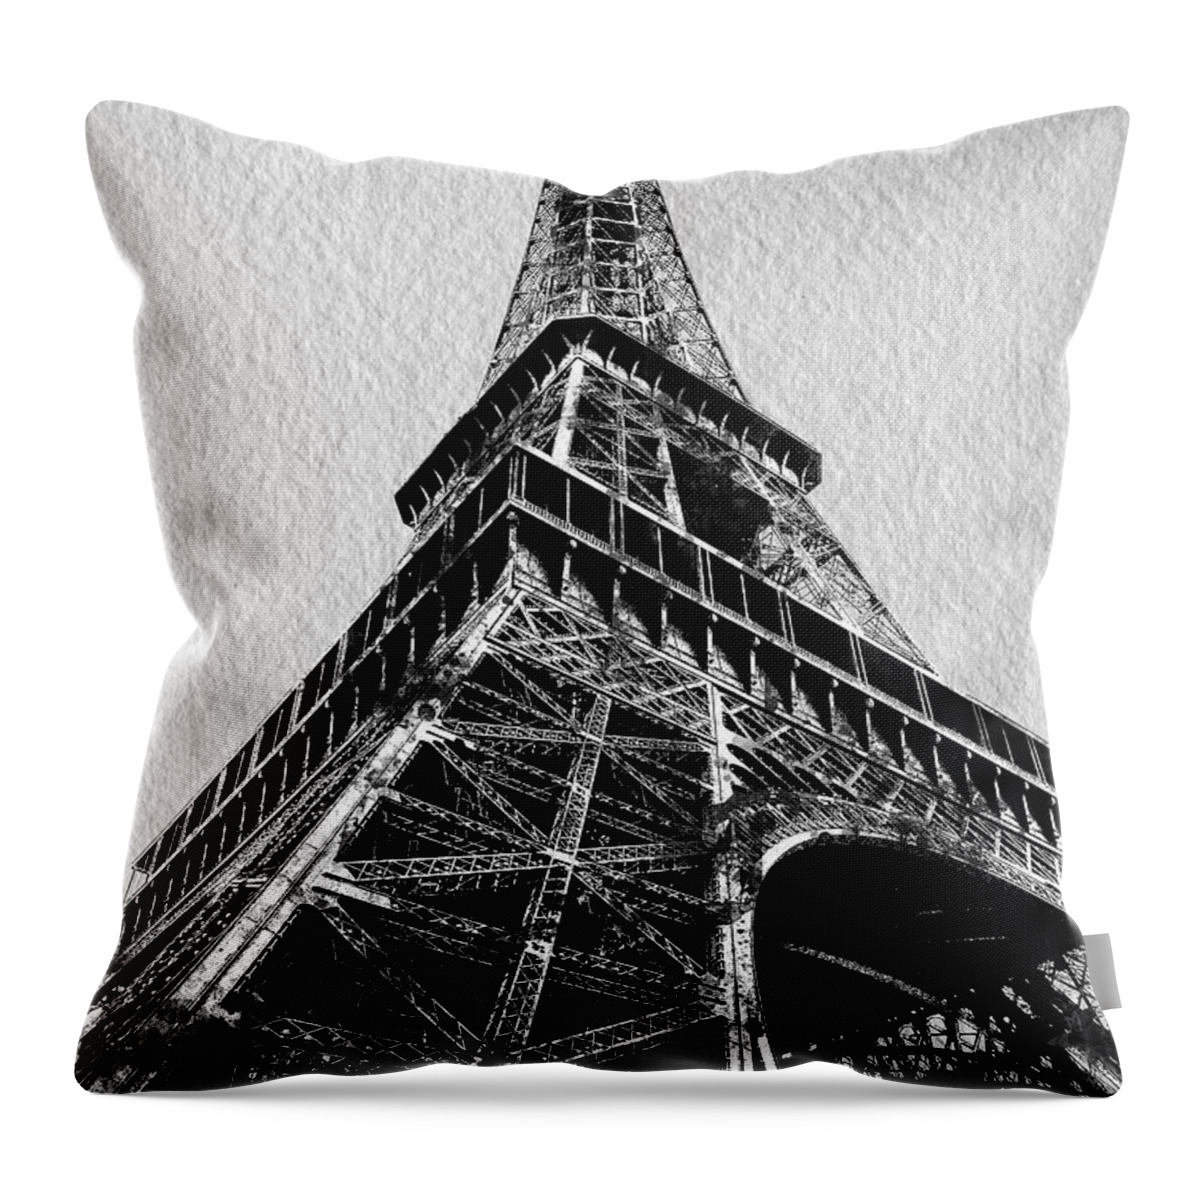 Eiffel Tower Throw Pillow featuring the digital art Eiffel Tower #1 by Marlene Watson